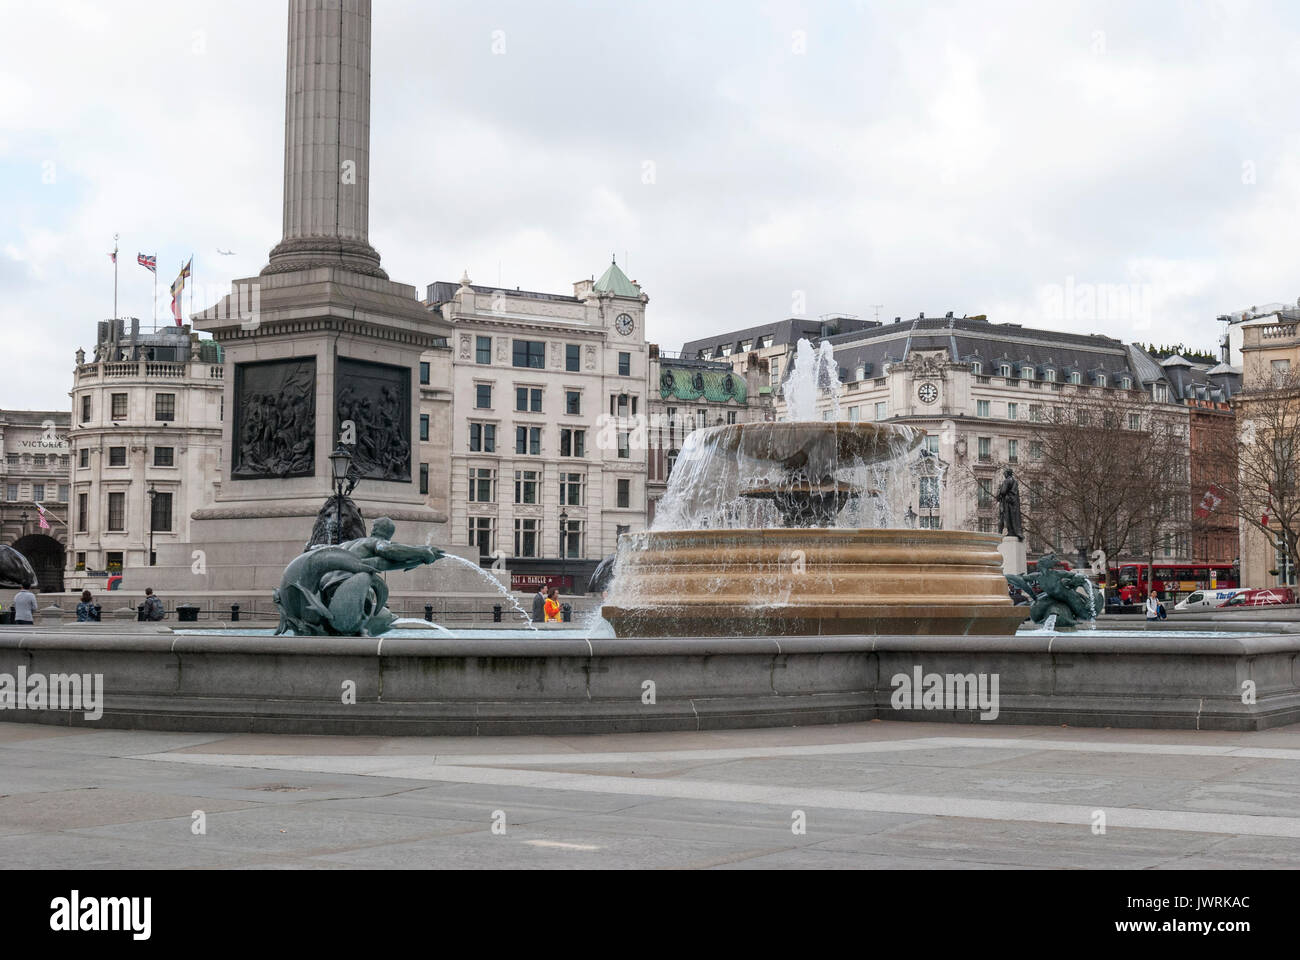 Londra Inghilterra, Trafalgar Square, City of Westminster, attrazione turistica, London Public Park, Fountains in Trafalgar Square, Nelson's Column Monument Foto Stock